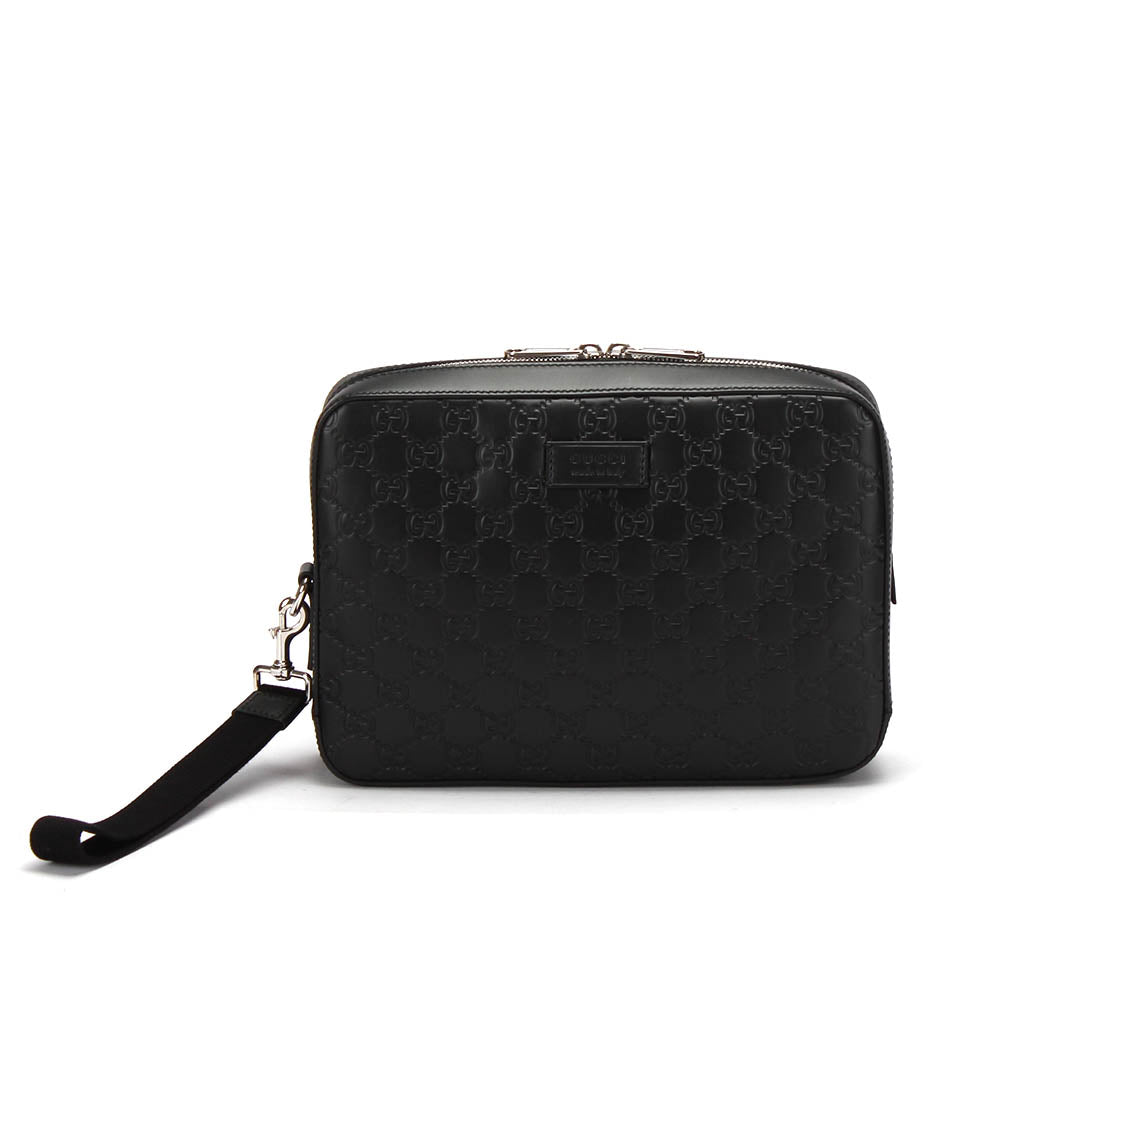 Gucci Guccissima Leather Clutch Bag 429146 in